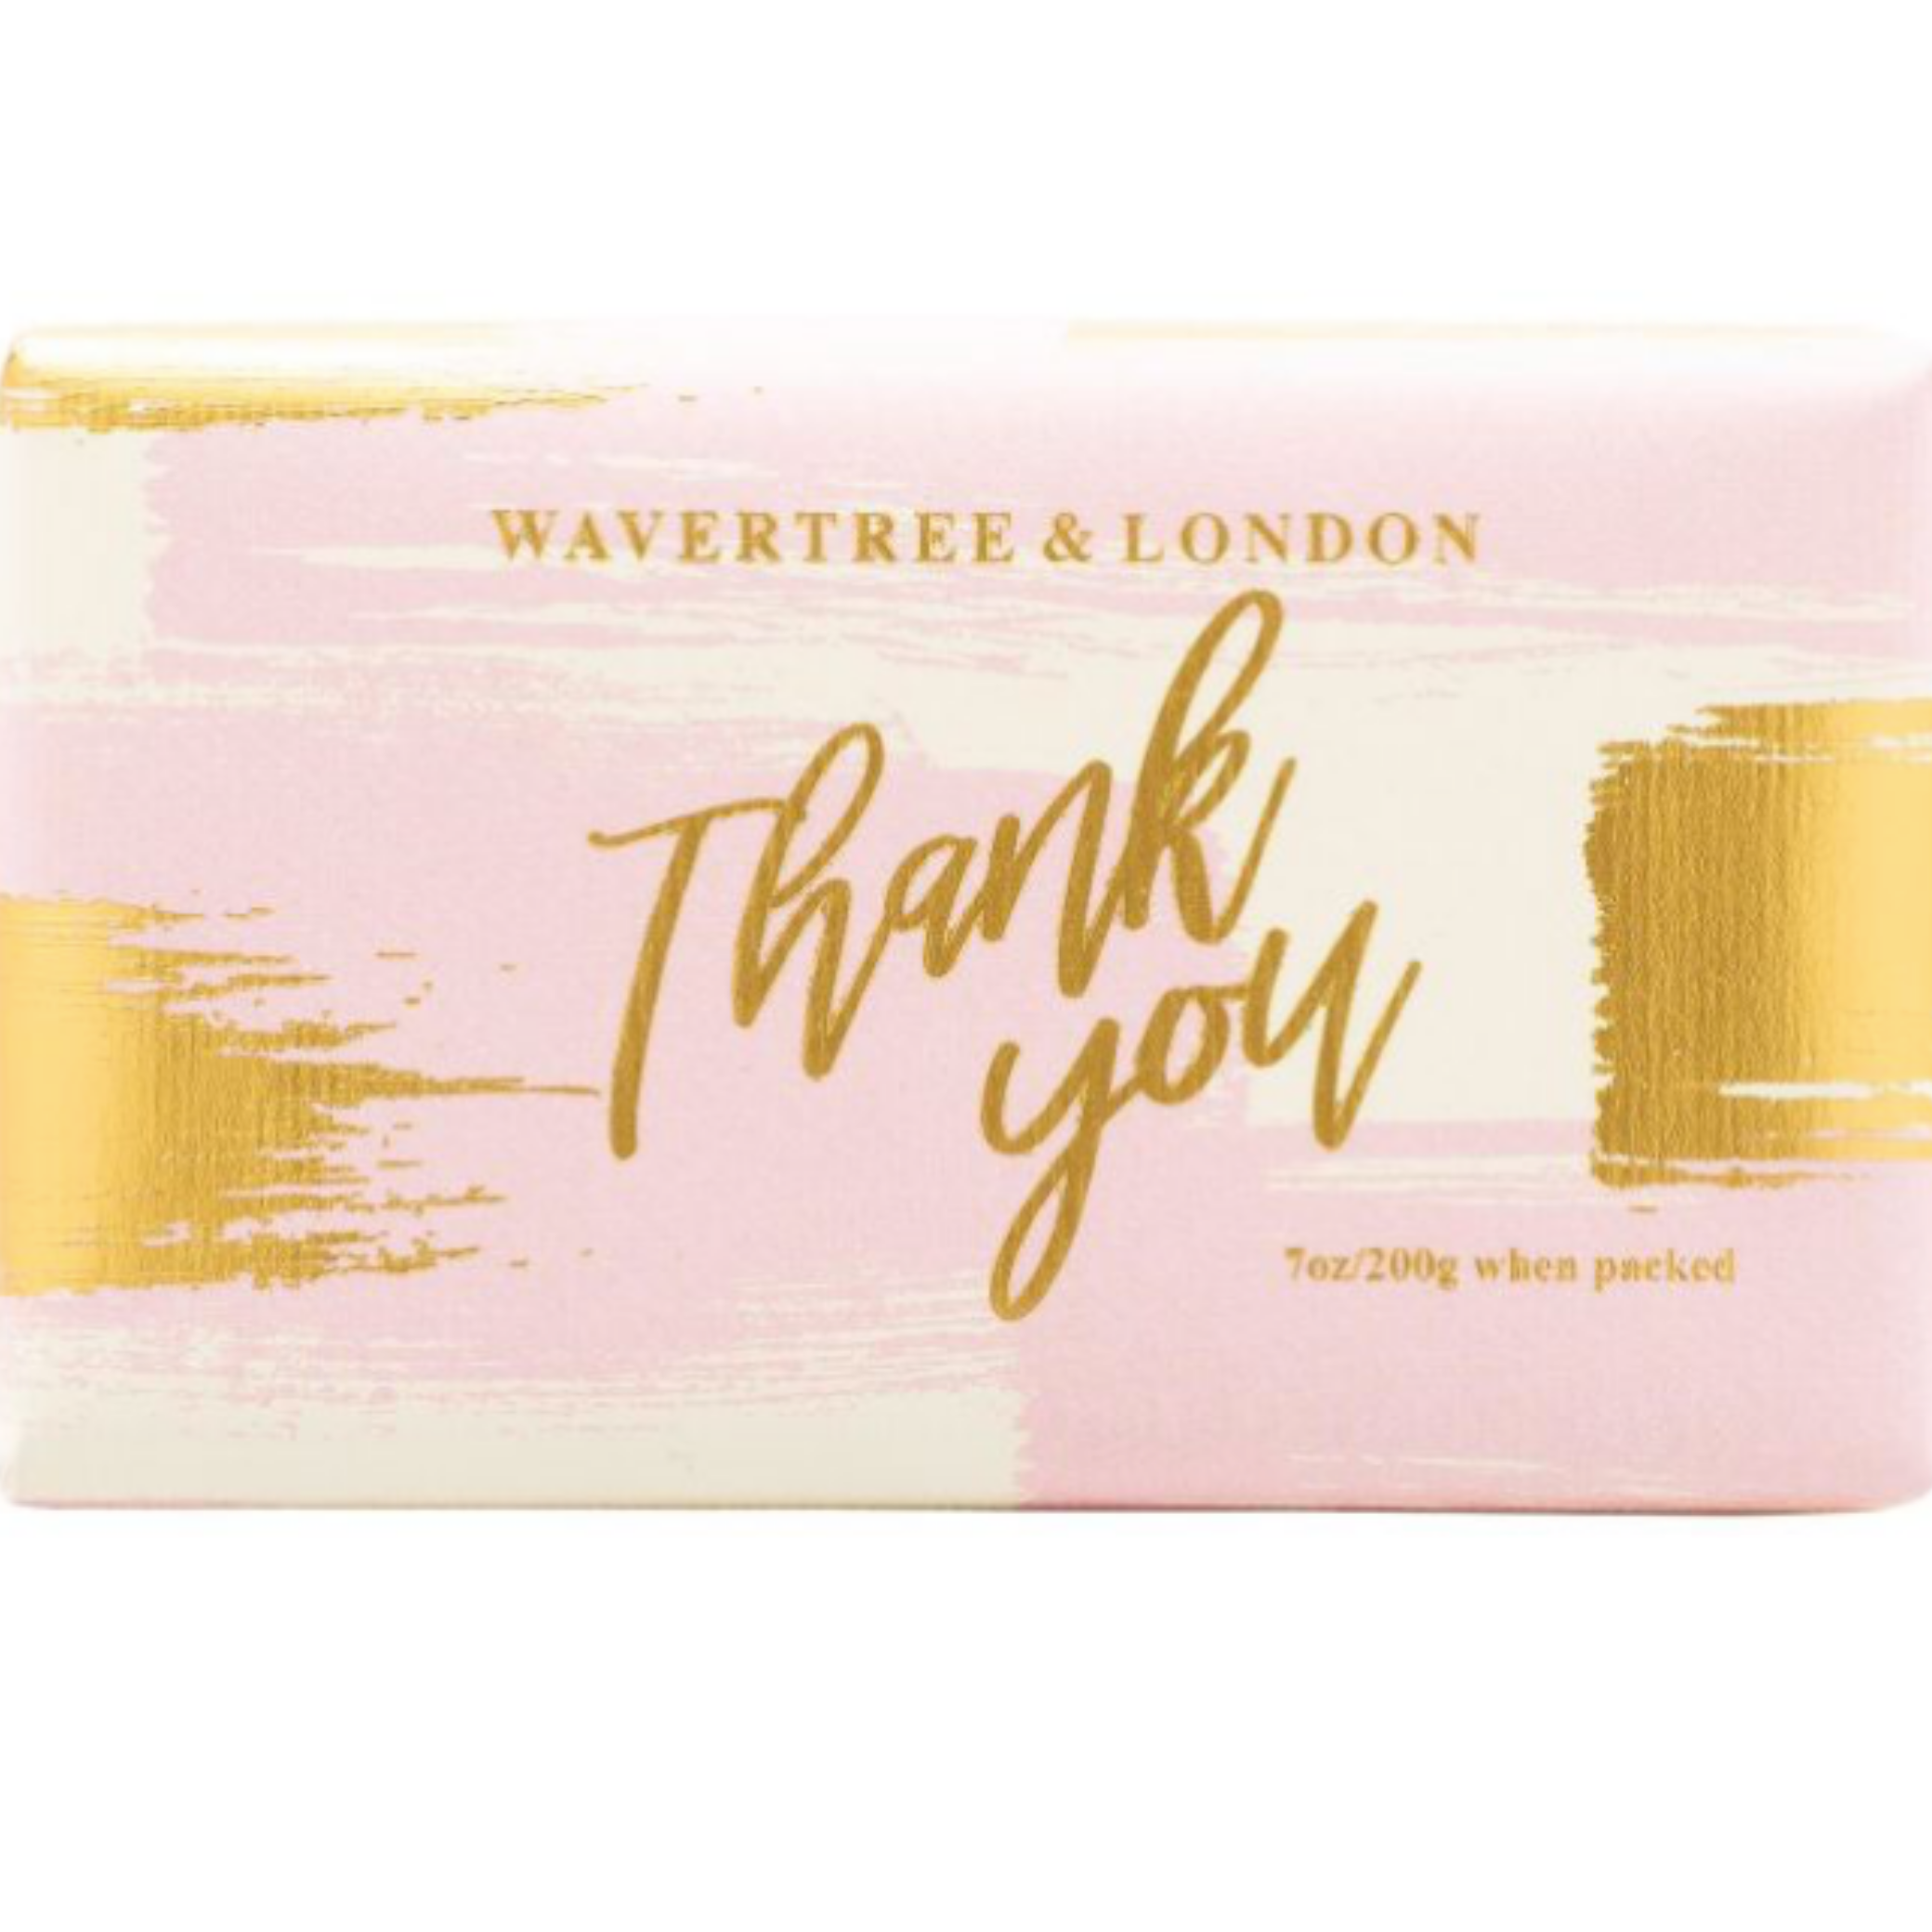 THANK YOU (PINK) SOAP - WAVERTREE & LONDON